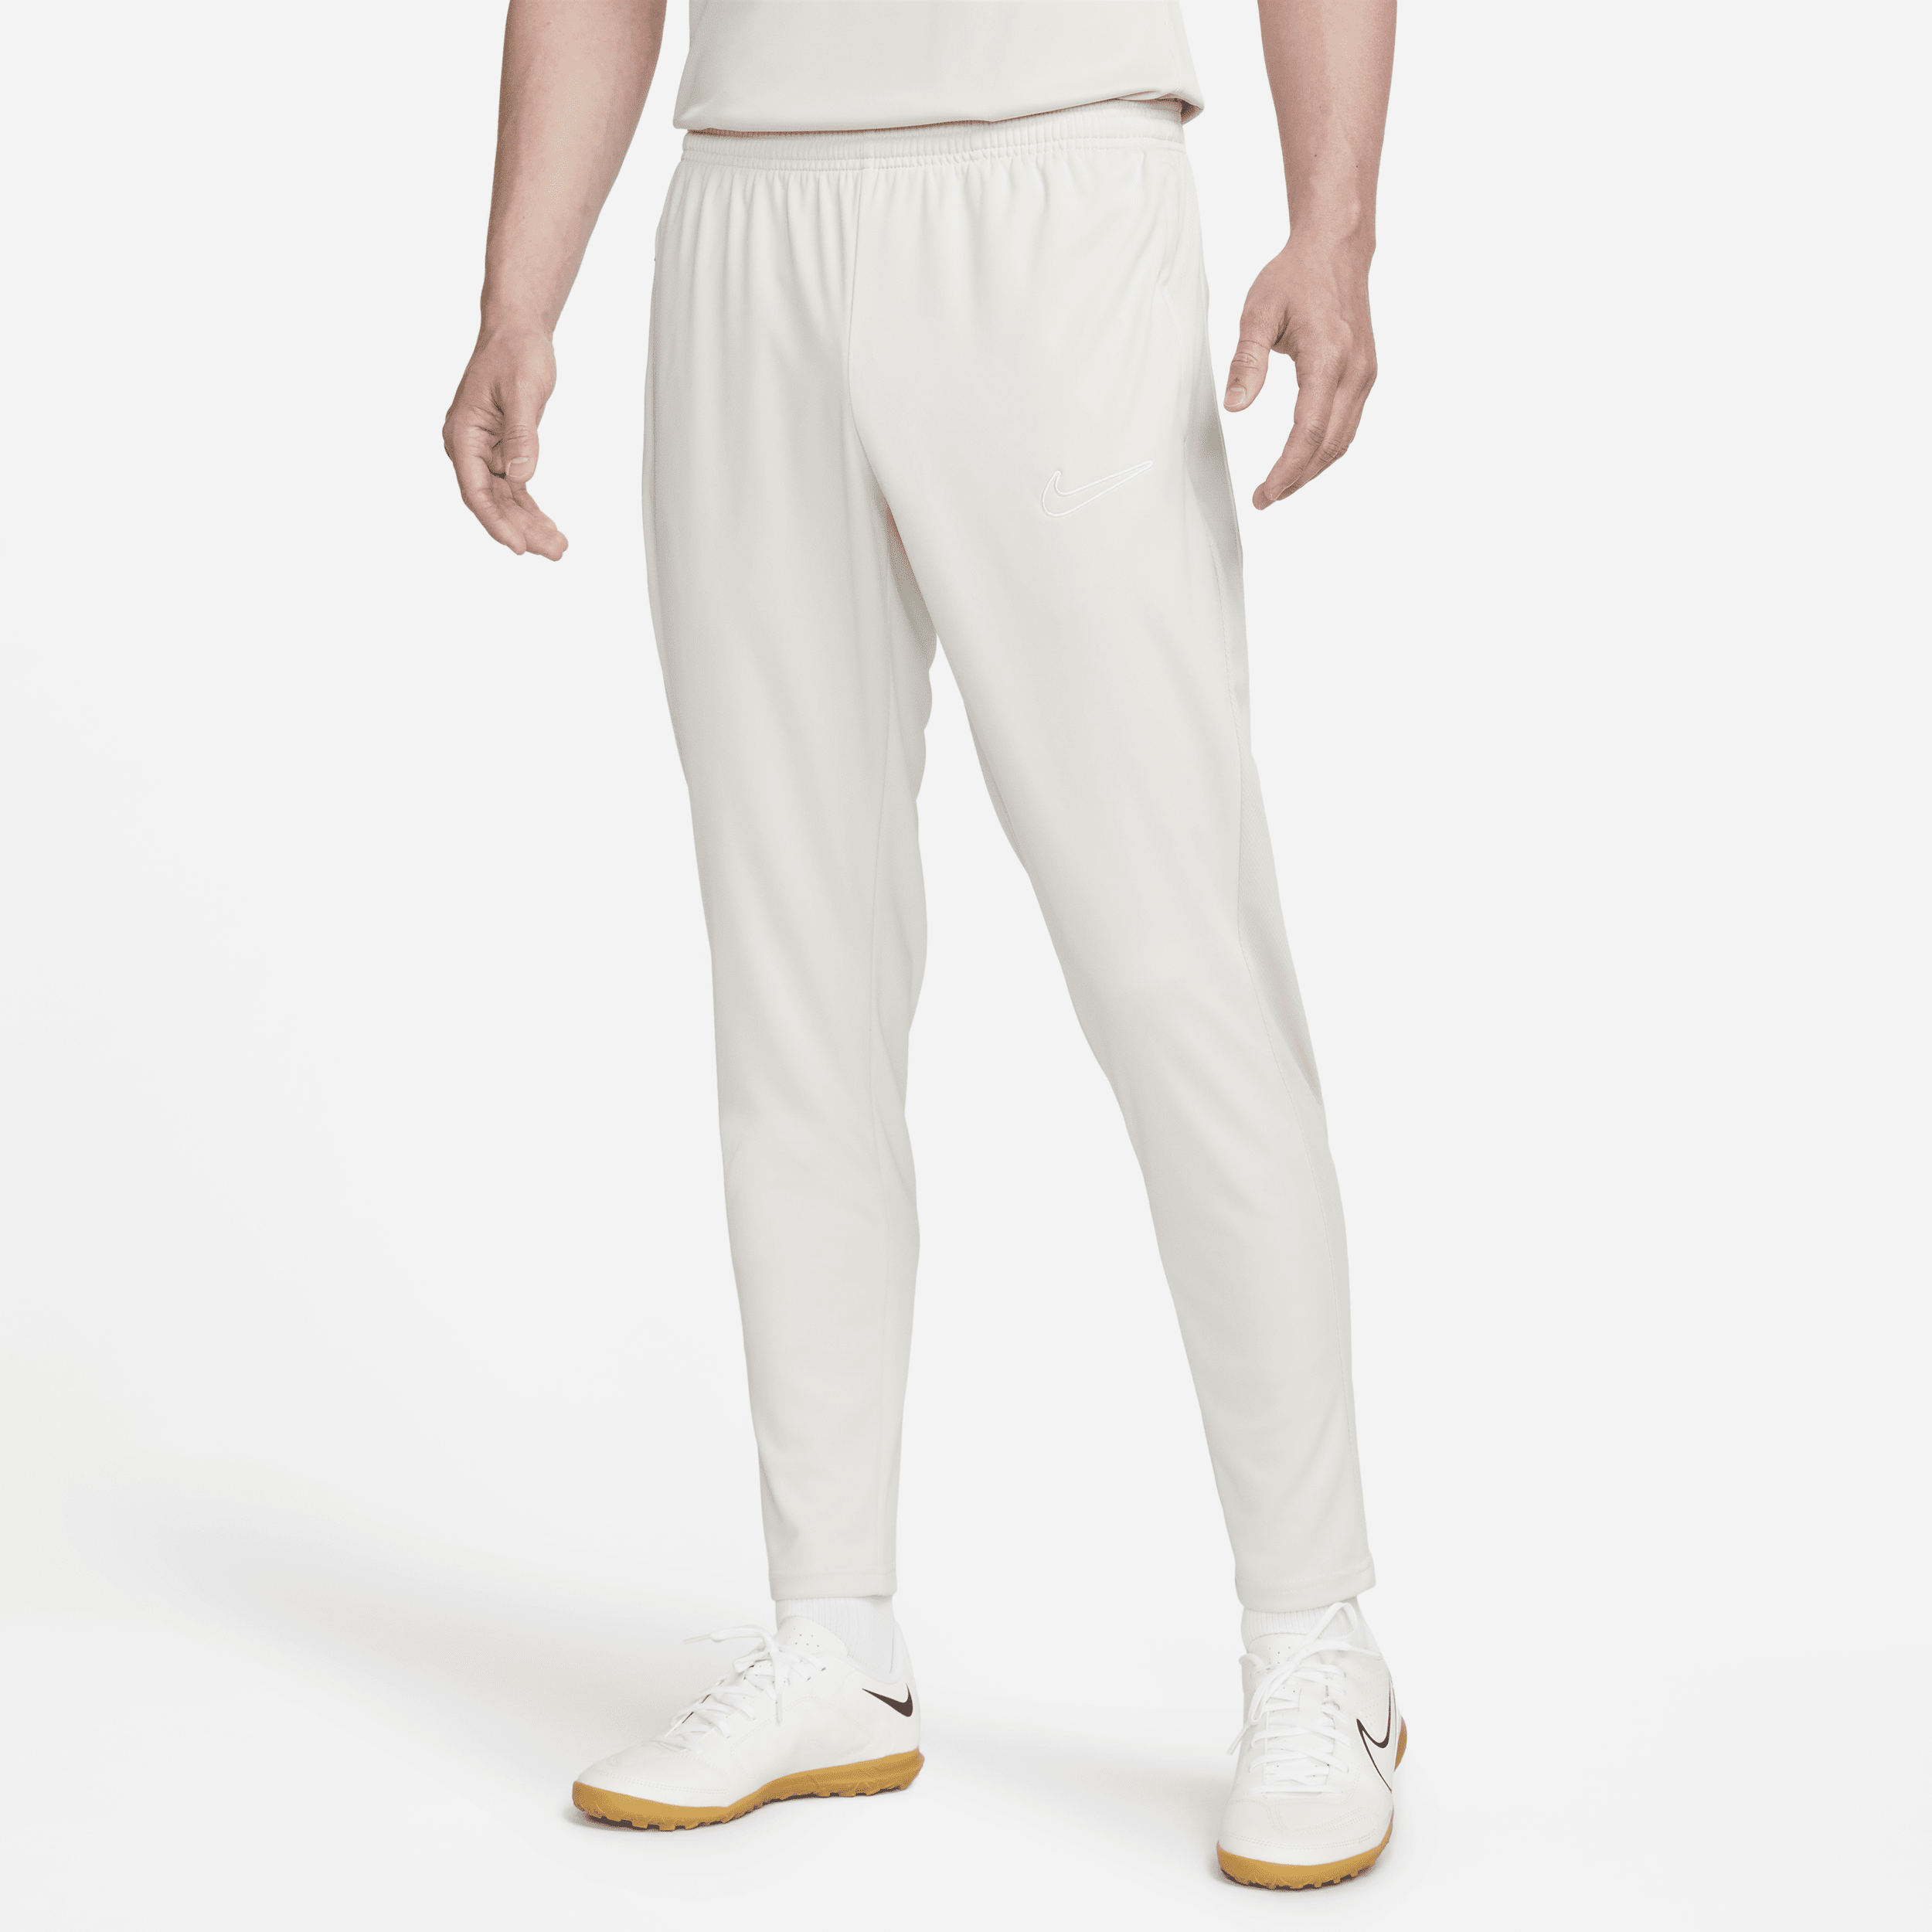 Nike Men's Dri-fit Academy Dri-fit Soccer Pants In Grey